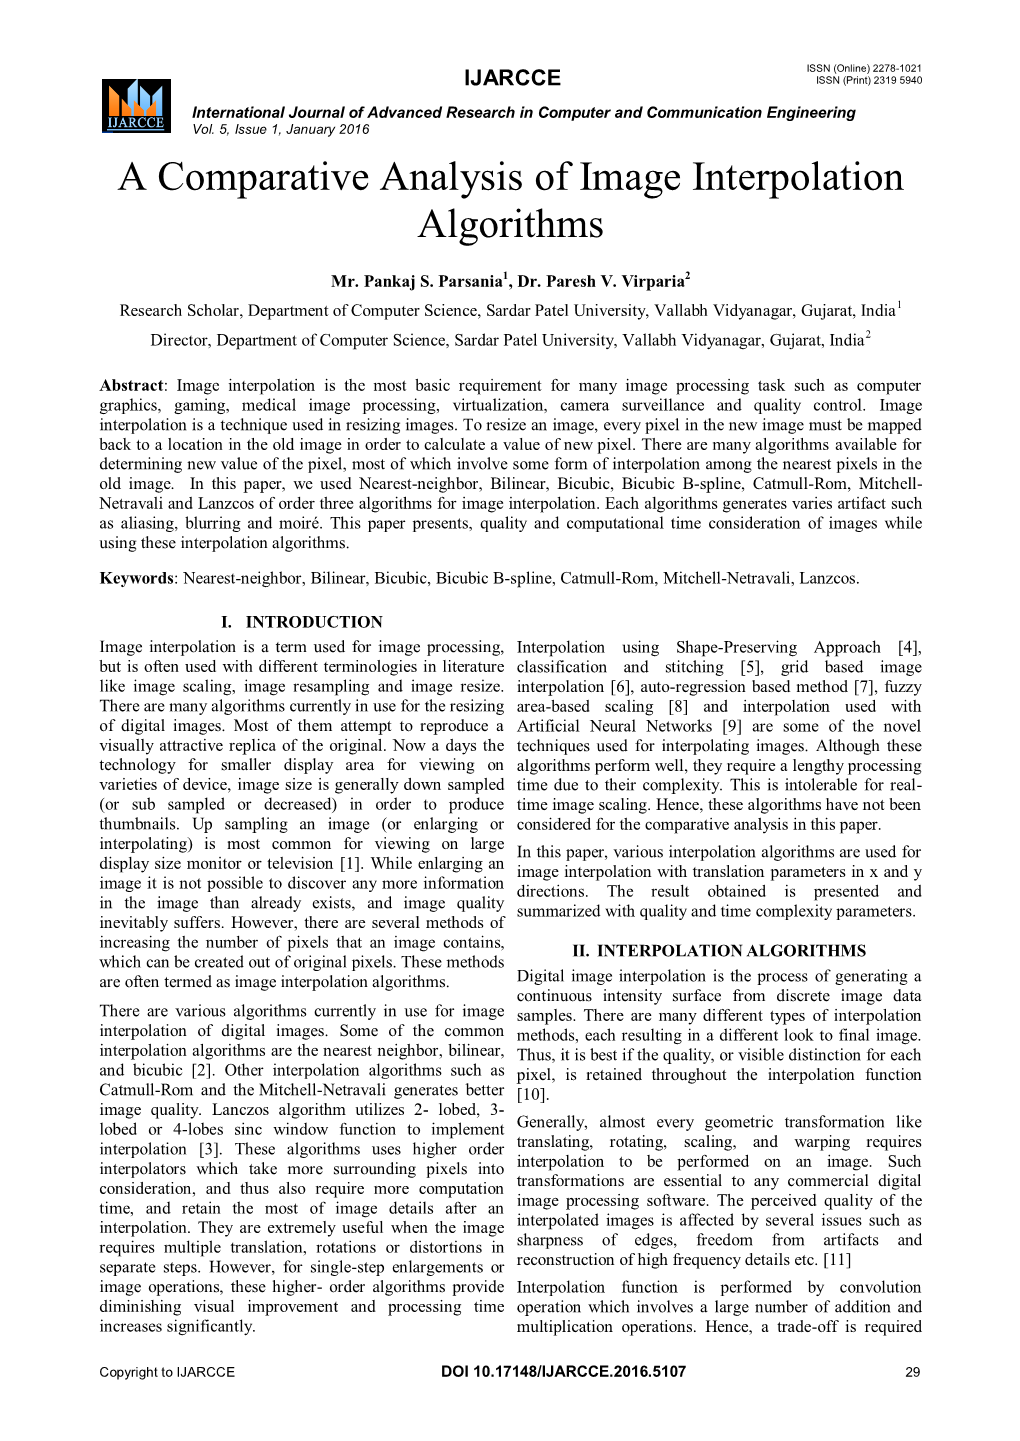 A Comparative Analysis of Image Interpolation Algorithms